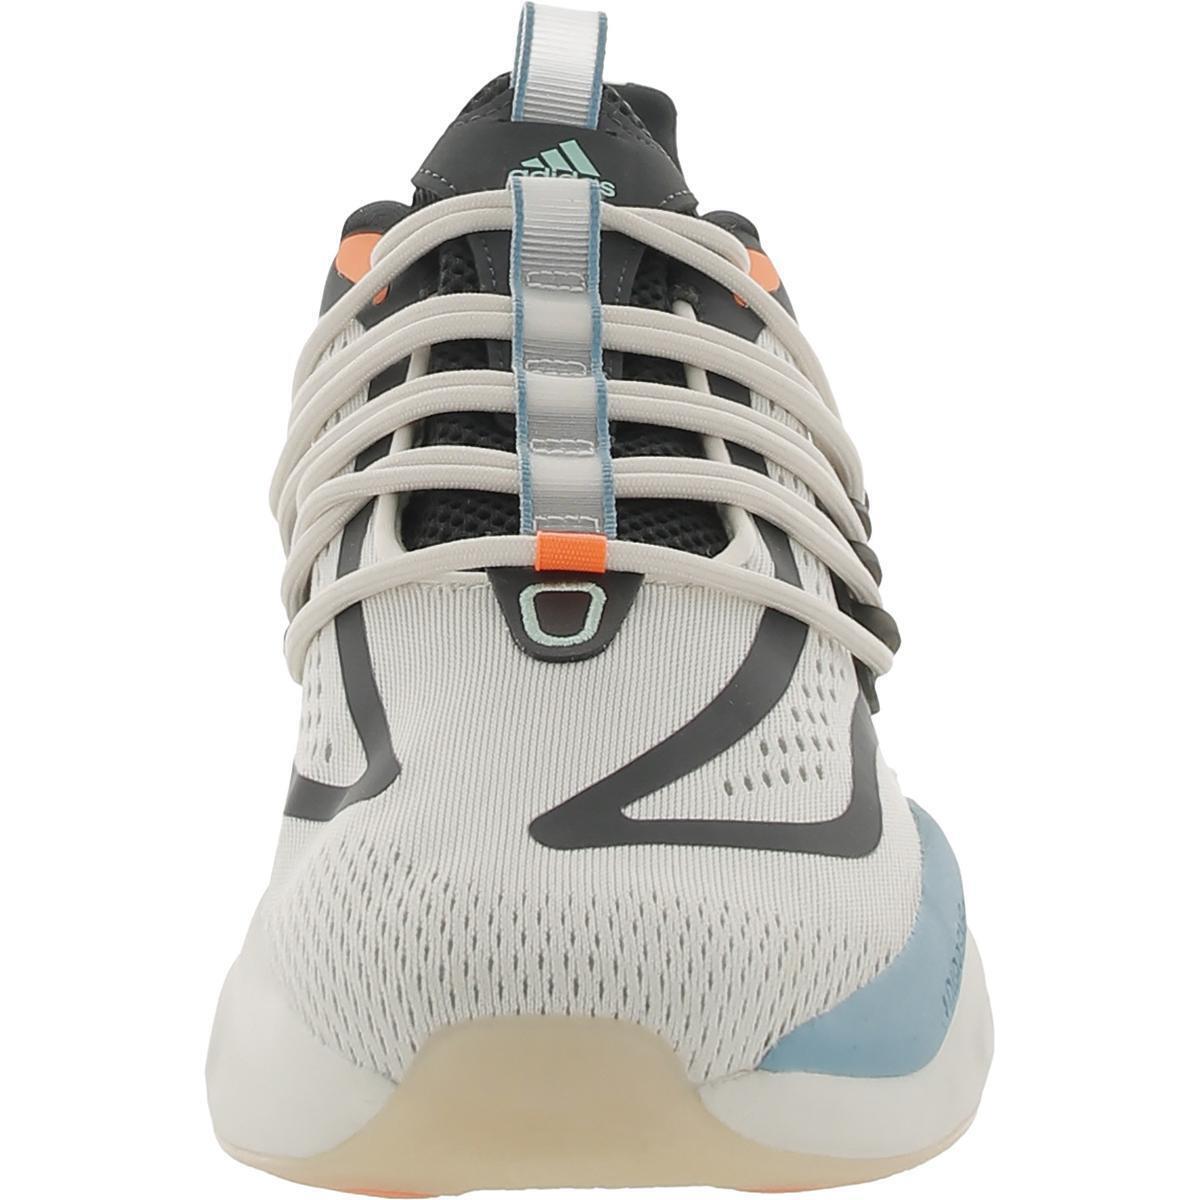 Adidas Mens Alphaboost V1 Fitness Running Training Shoes Sneakers Bhfo 3006 - Ivory/Black Multi